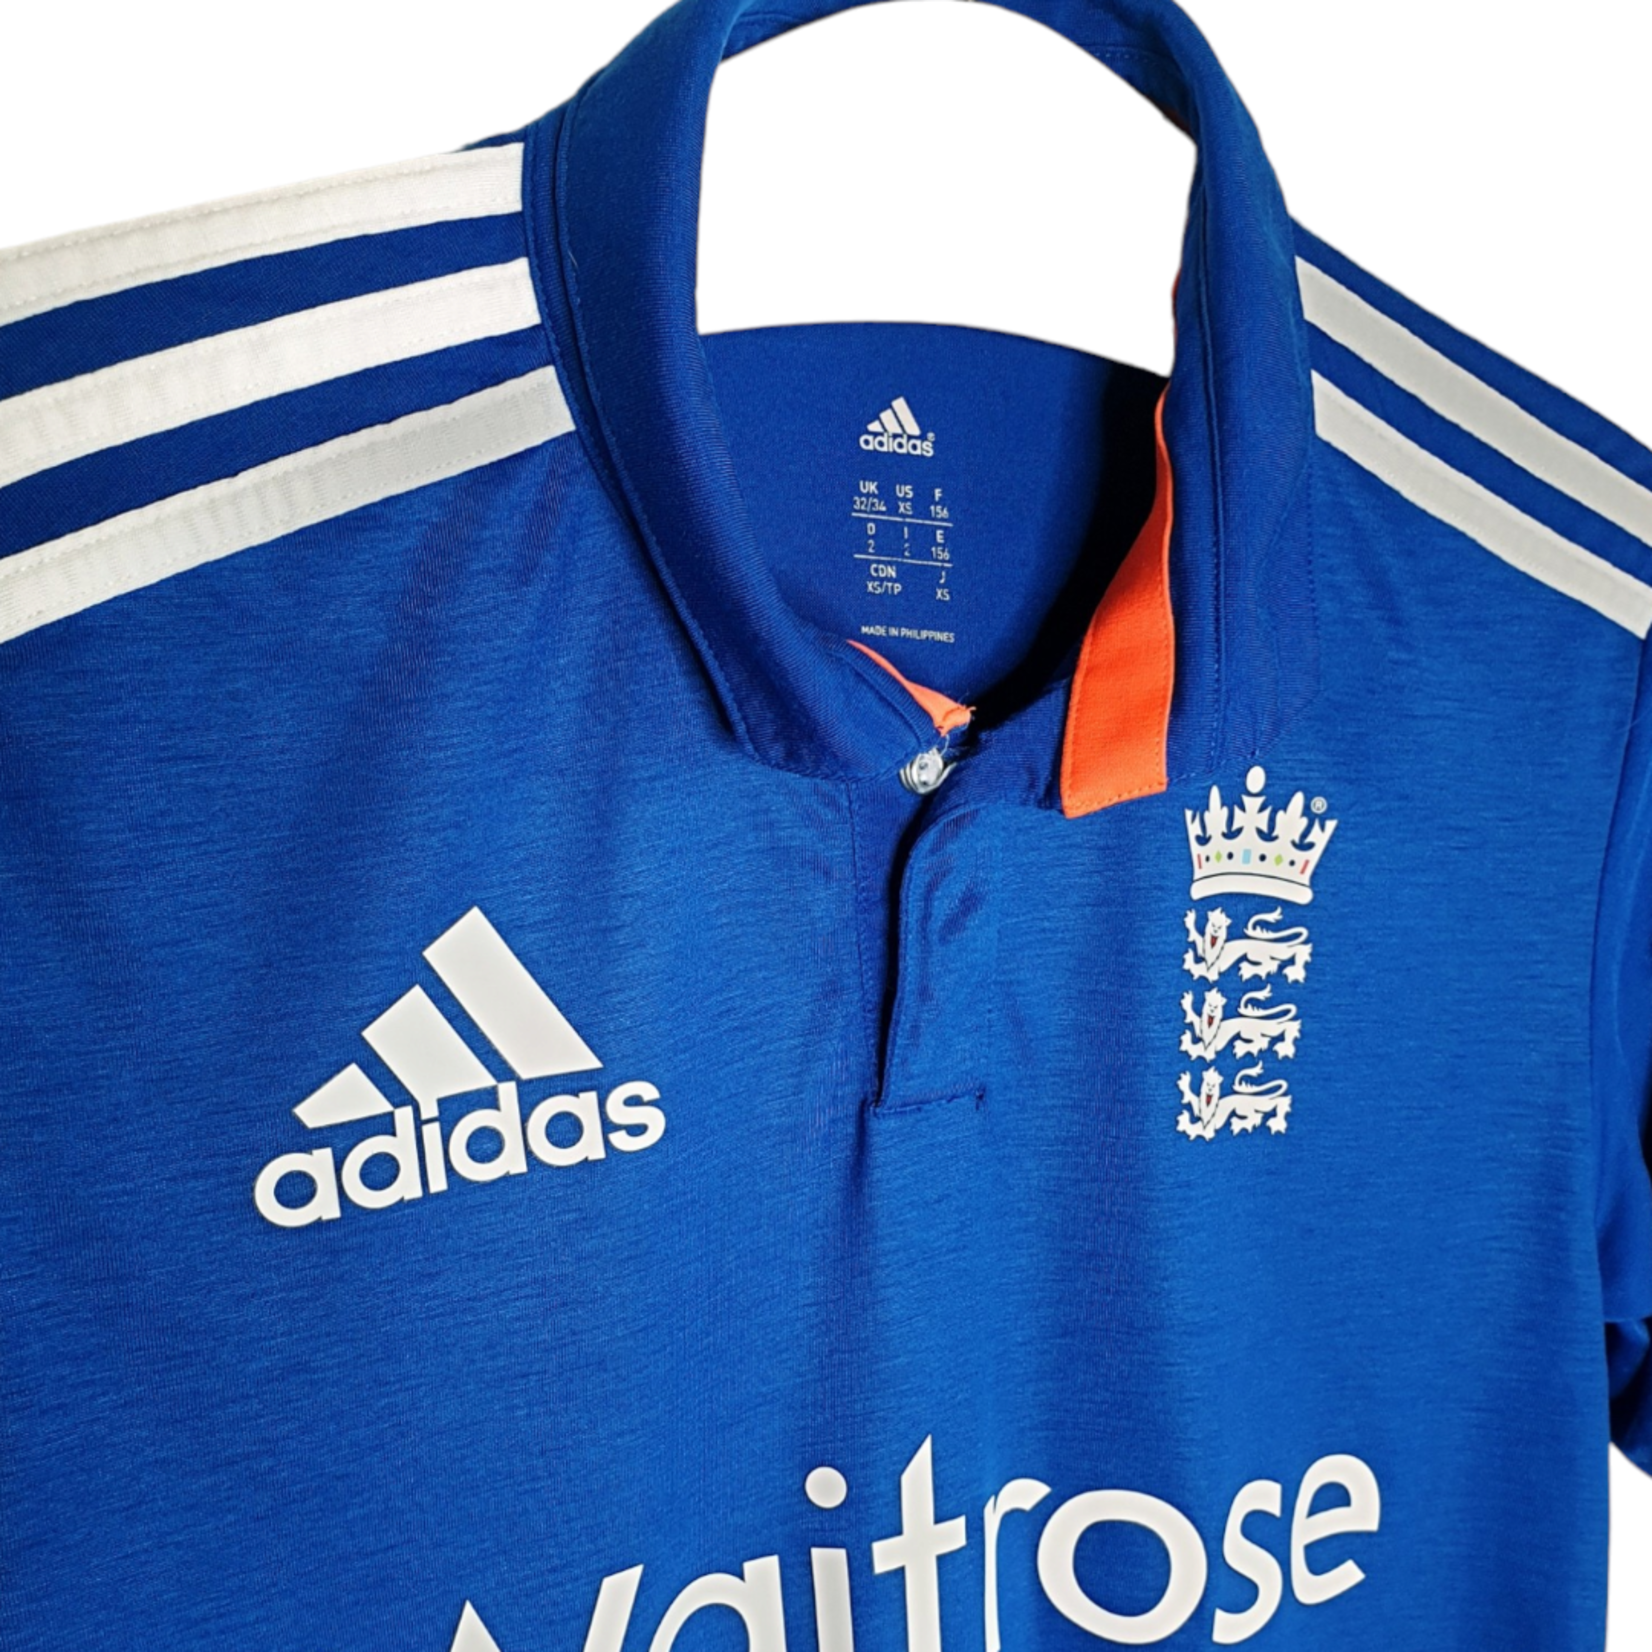 Adidas Origineel Adidas vintage cricket shirt Engeland 2015